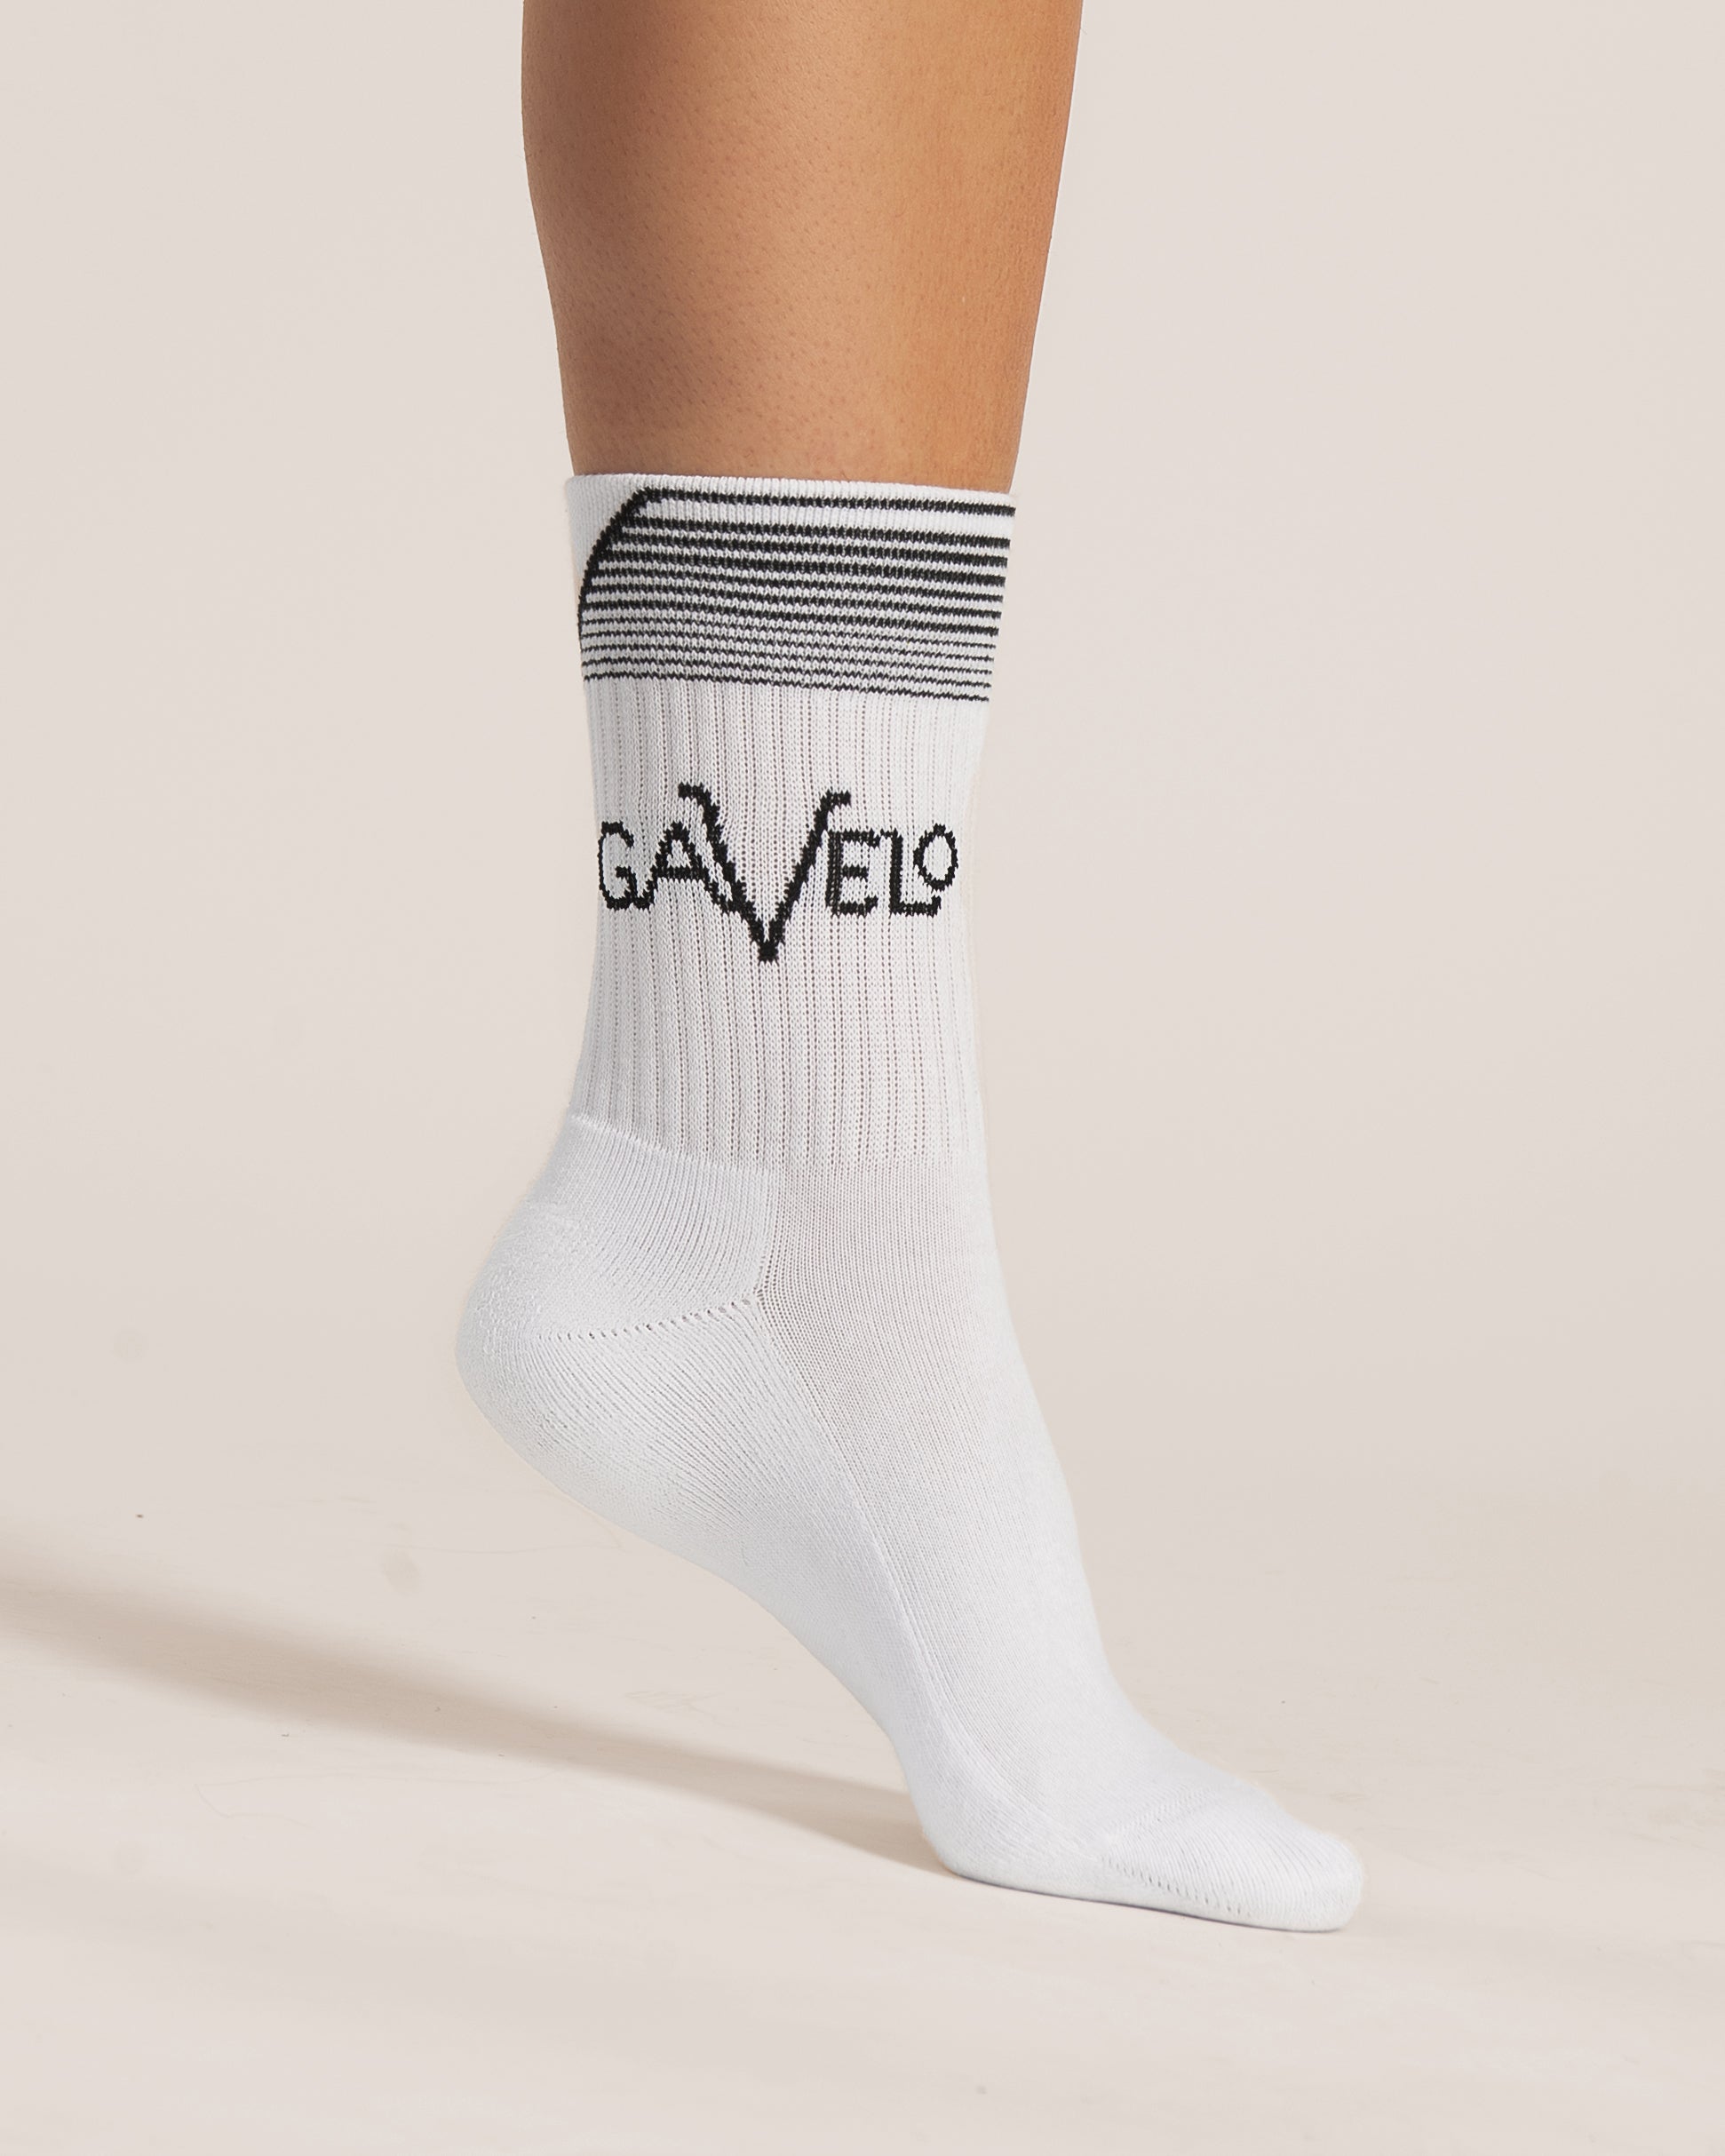 GAVELO Athletic Socks